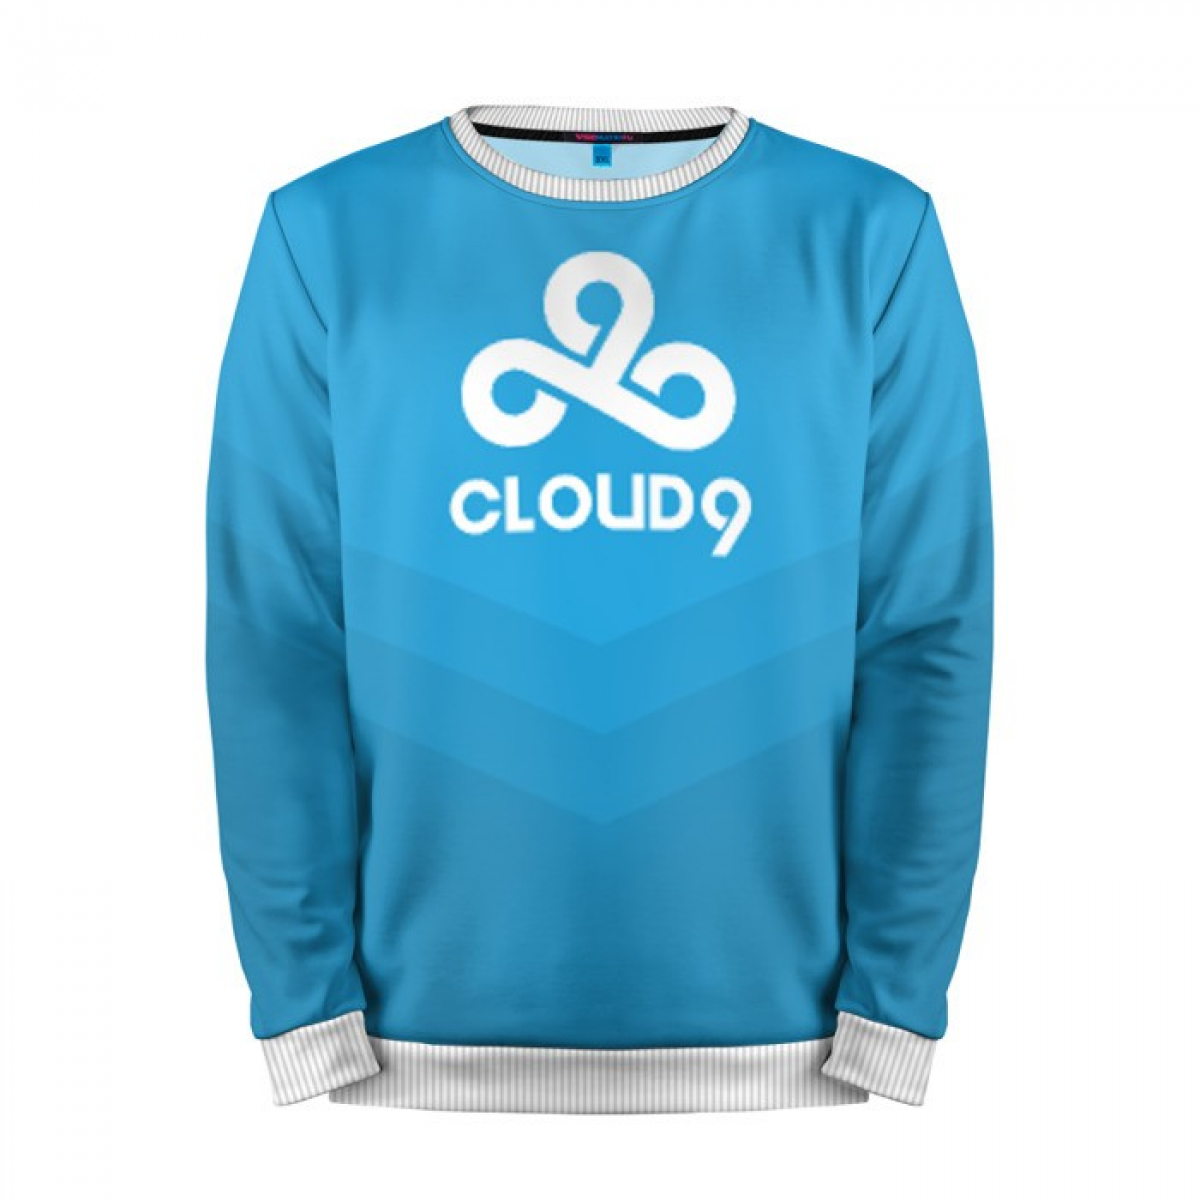 Клауд тим. Cloud 9 одежда. Футболка cloud9. Мужской свитшот 3d облака XS. Спортивный костюм cloud 9.